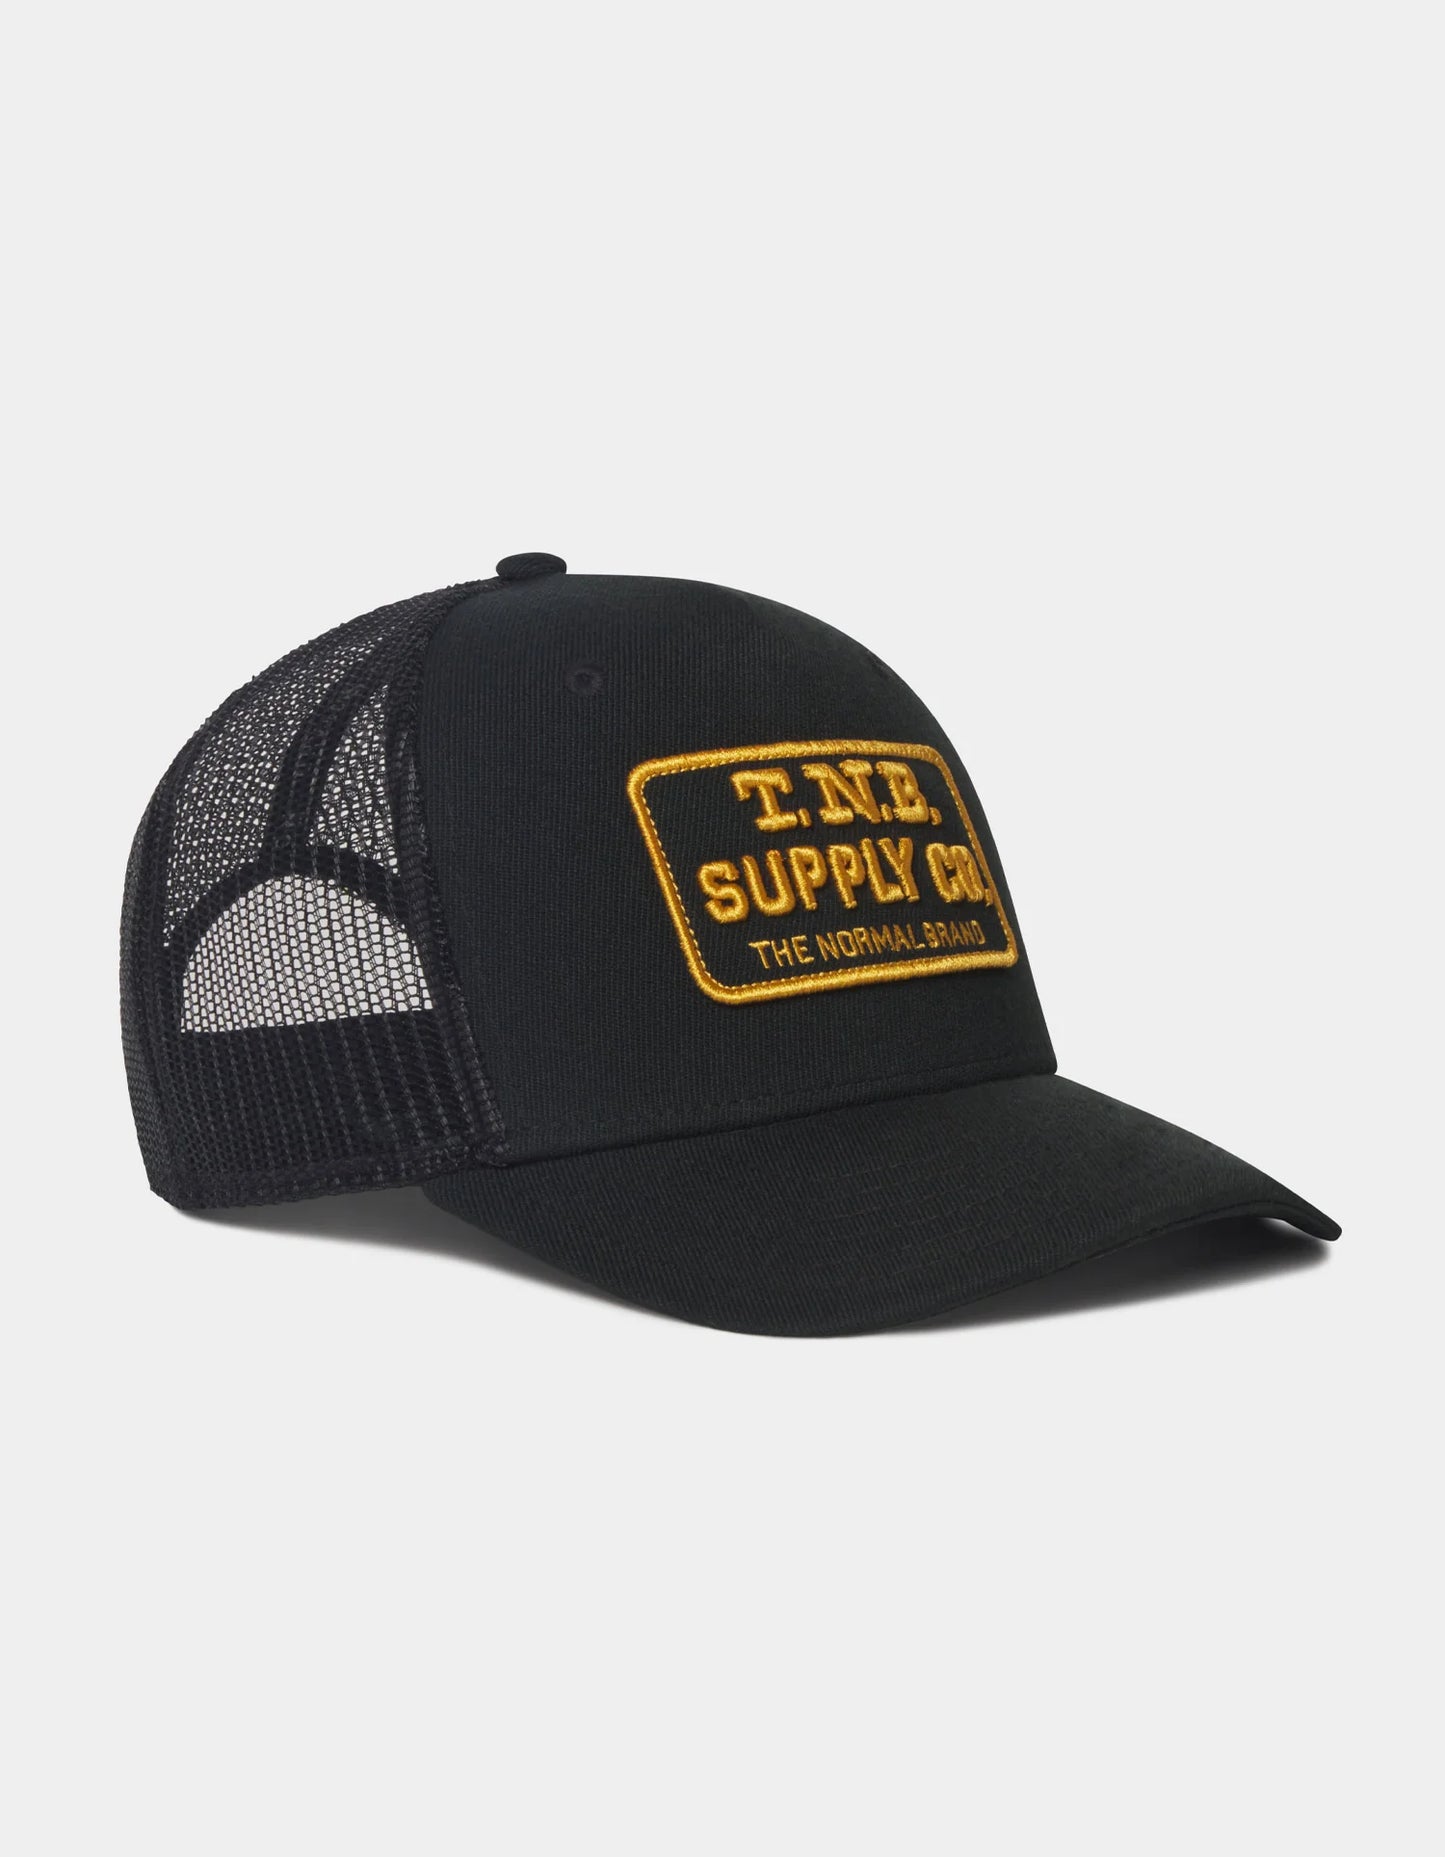 TNB Supply Co. 5- Panel Cap-Black-One Size